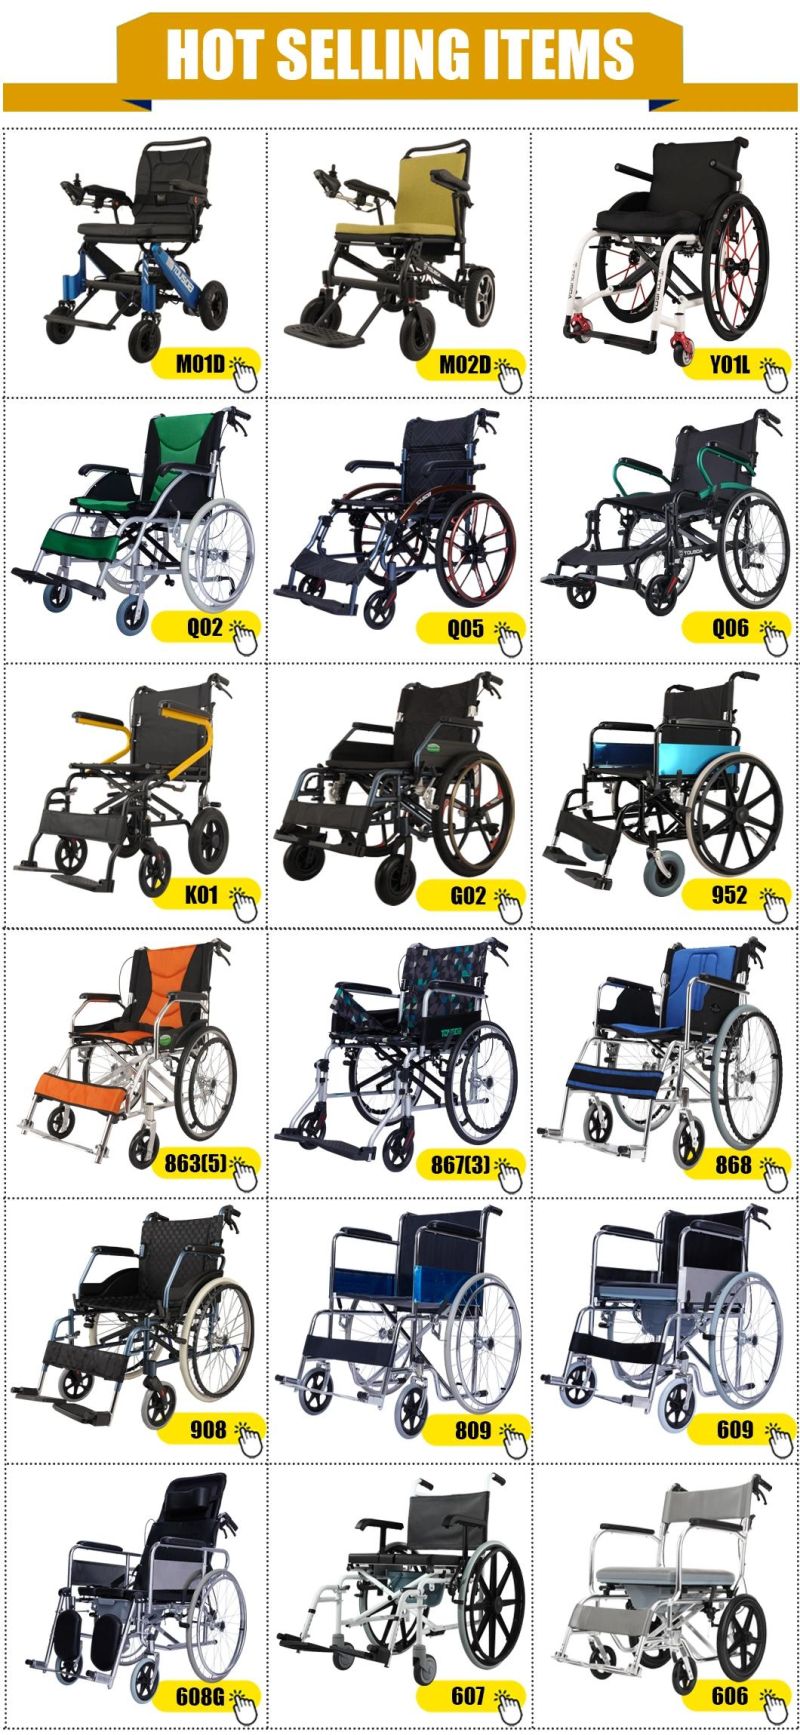 Rigid Folding Smart Drive Disabled Power Wheelchair